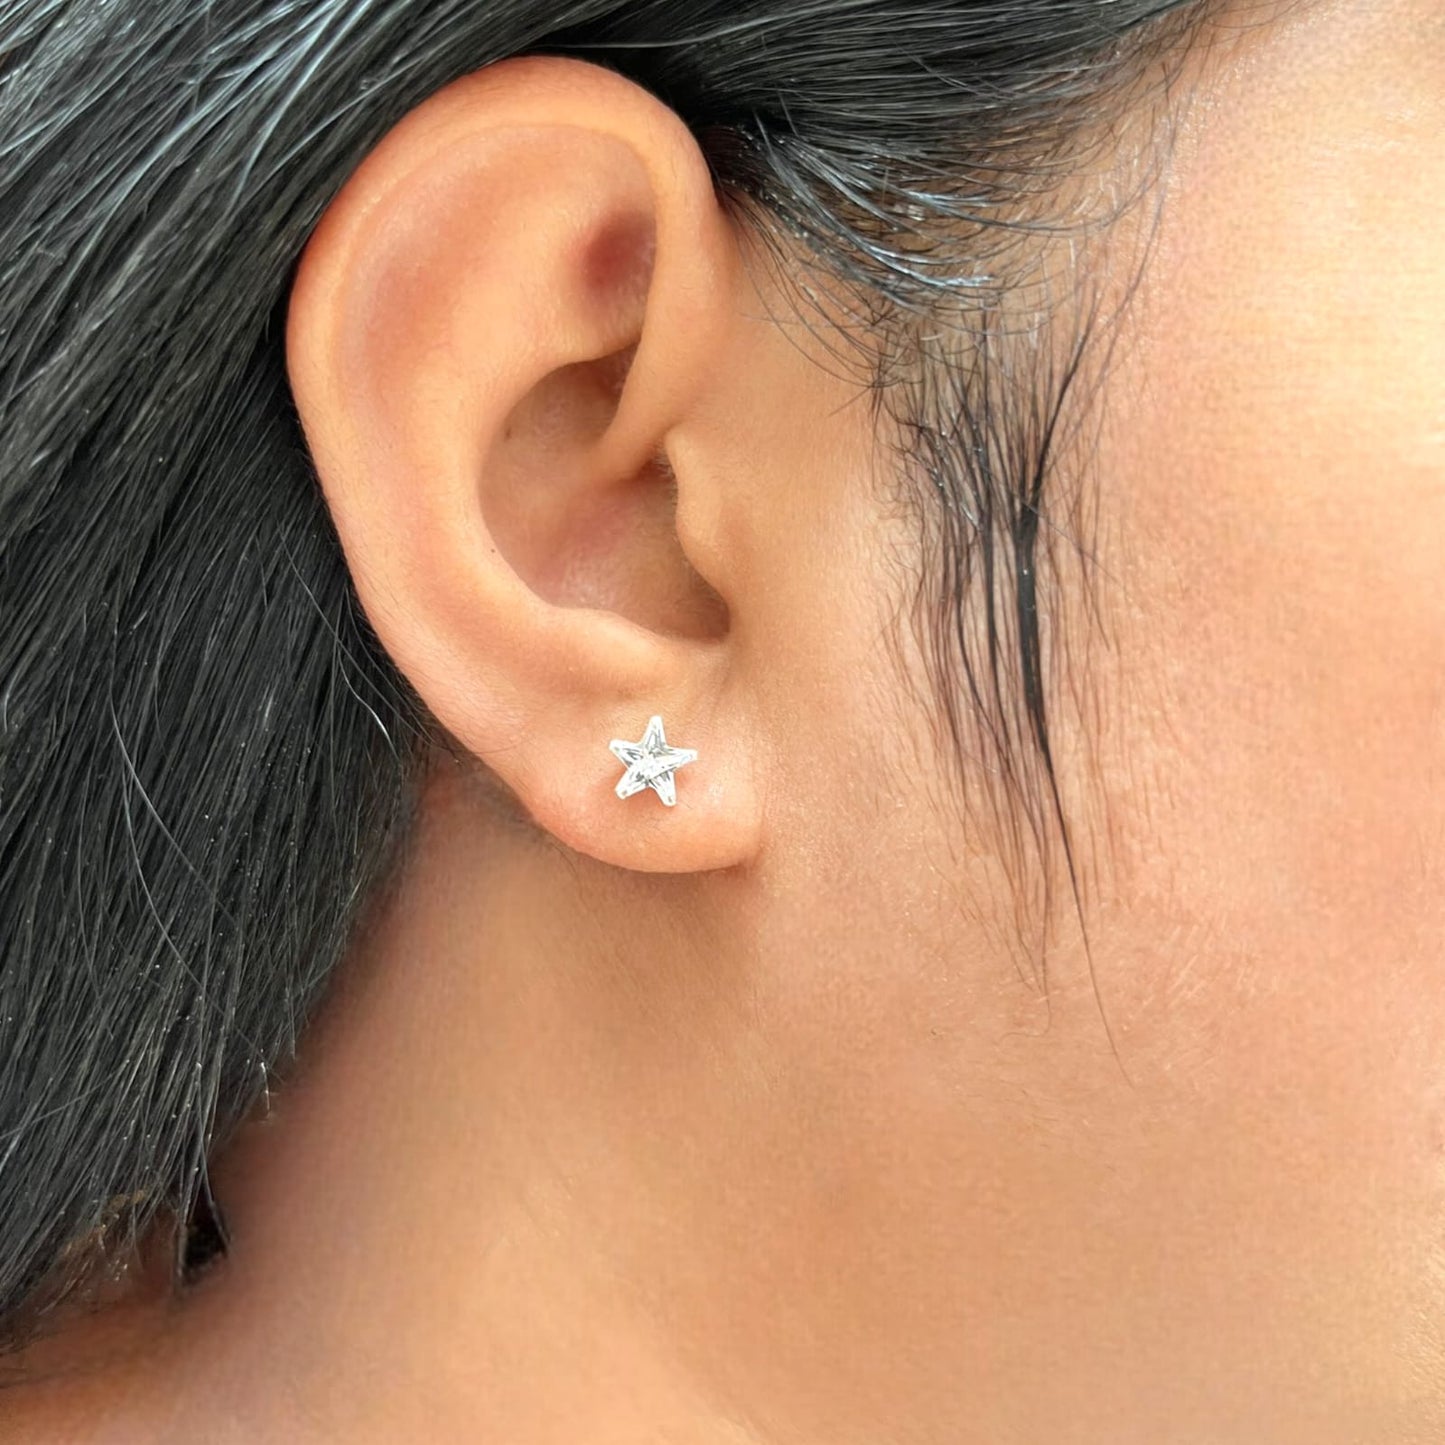 925 Sterling Silver Star Shape Earring Stud For Girls And Women